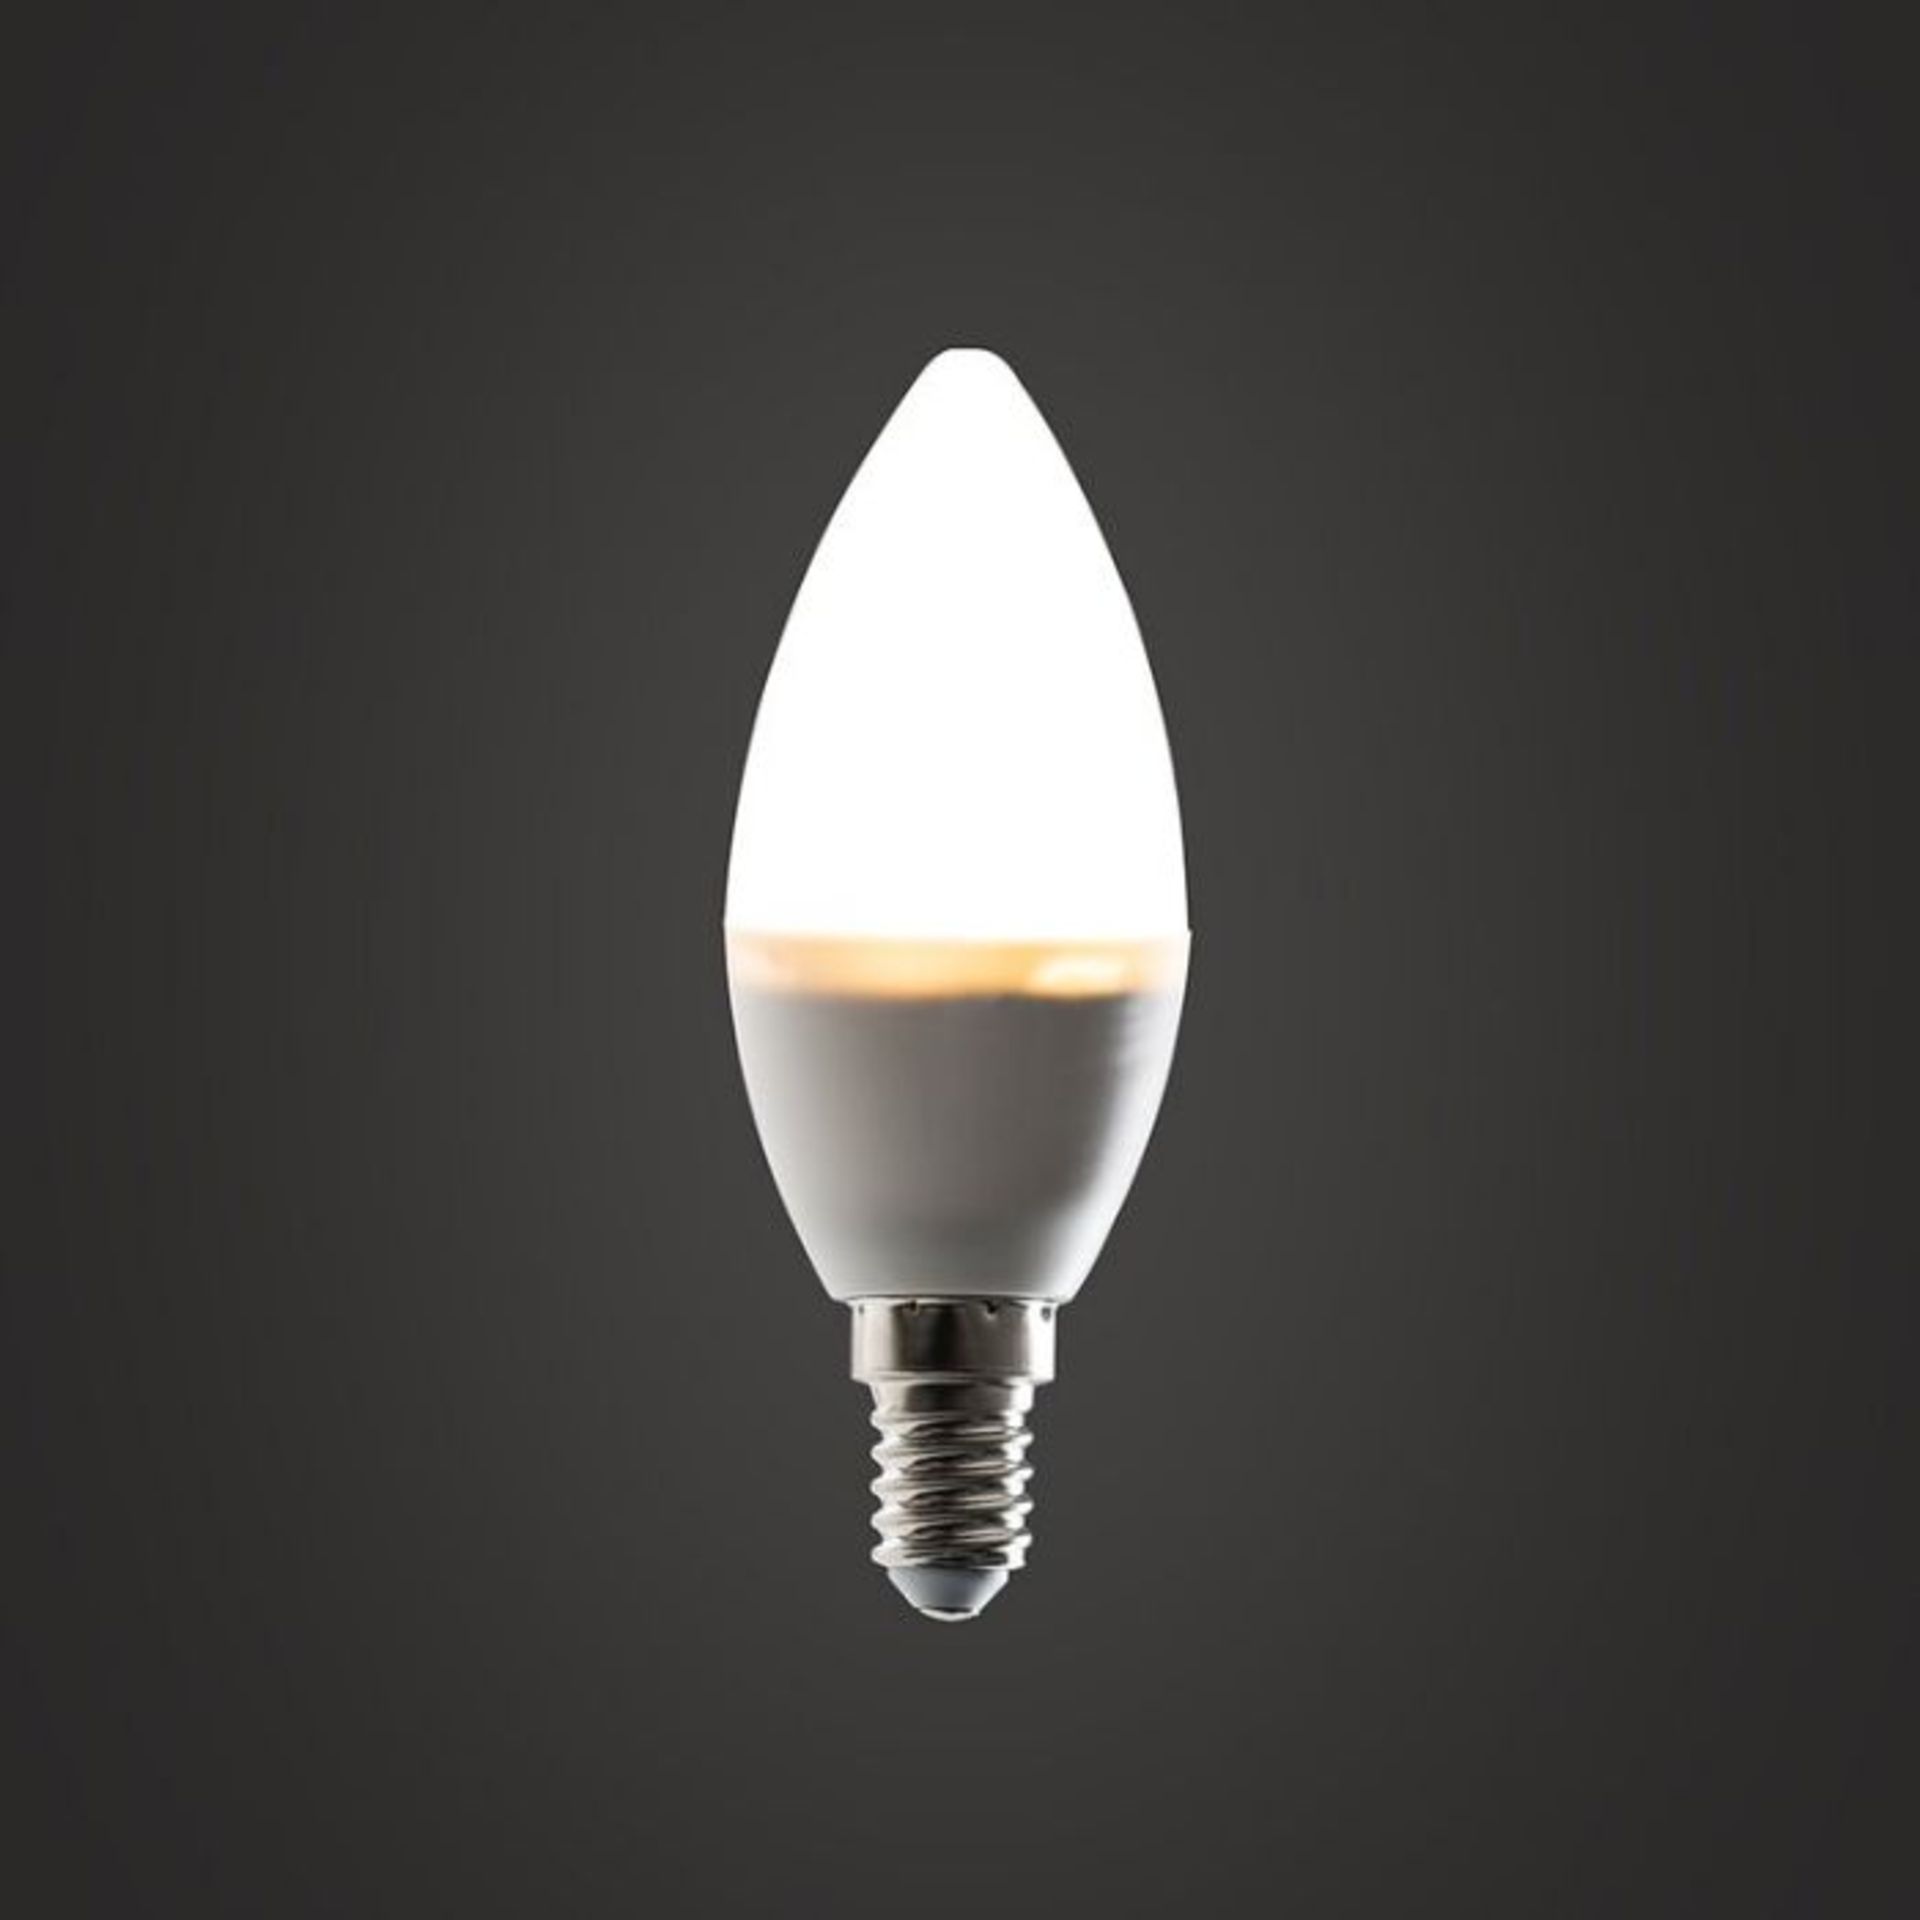 Wayfair Basics, 4W E14 LED Candle Light Bulb Frosted - RRP £14.99 (MSUN1682 - 17267/4)